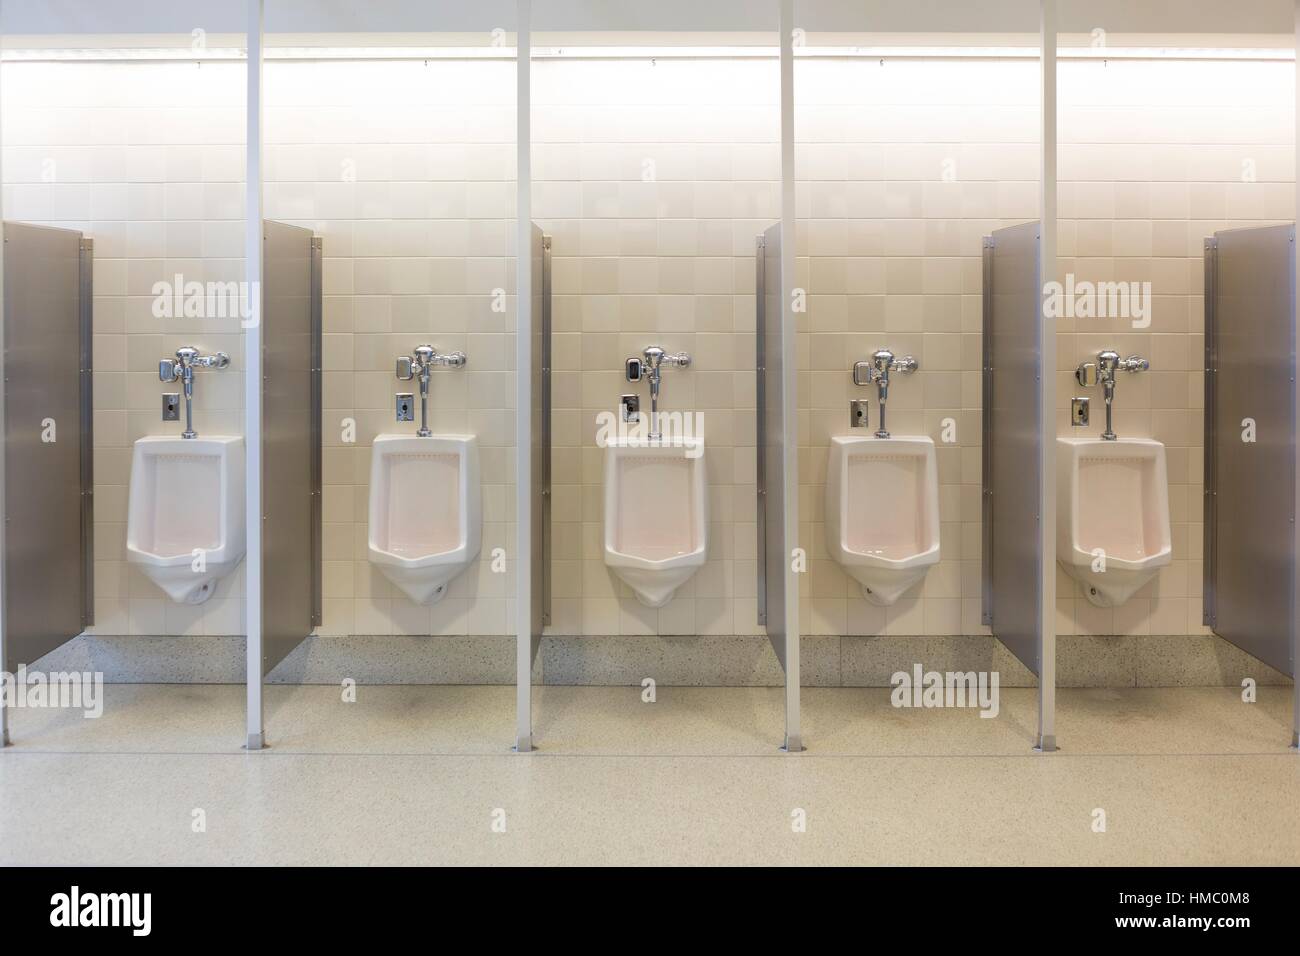 Men´s room urinals, RDU airport, Durham, NC, USA Stock Photo - Alamy